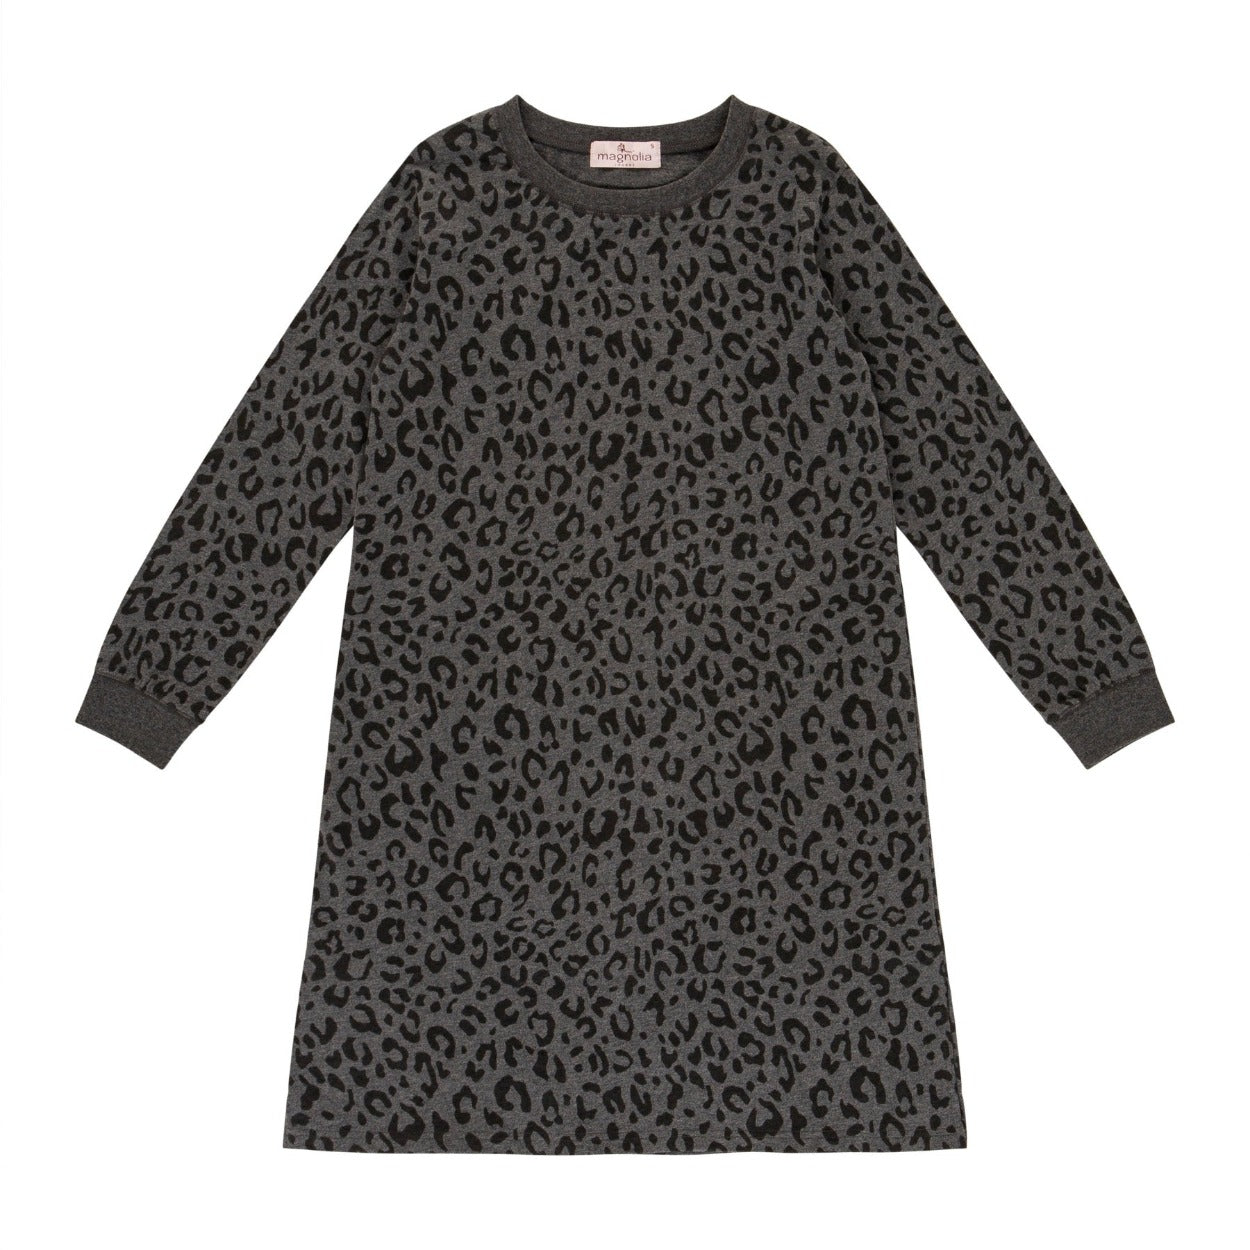 Samira Spot Cotton Jersey Long Sleeve Nightie | Ladies Sleepwear | Magnolia Lounge